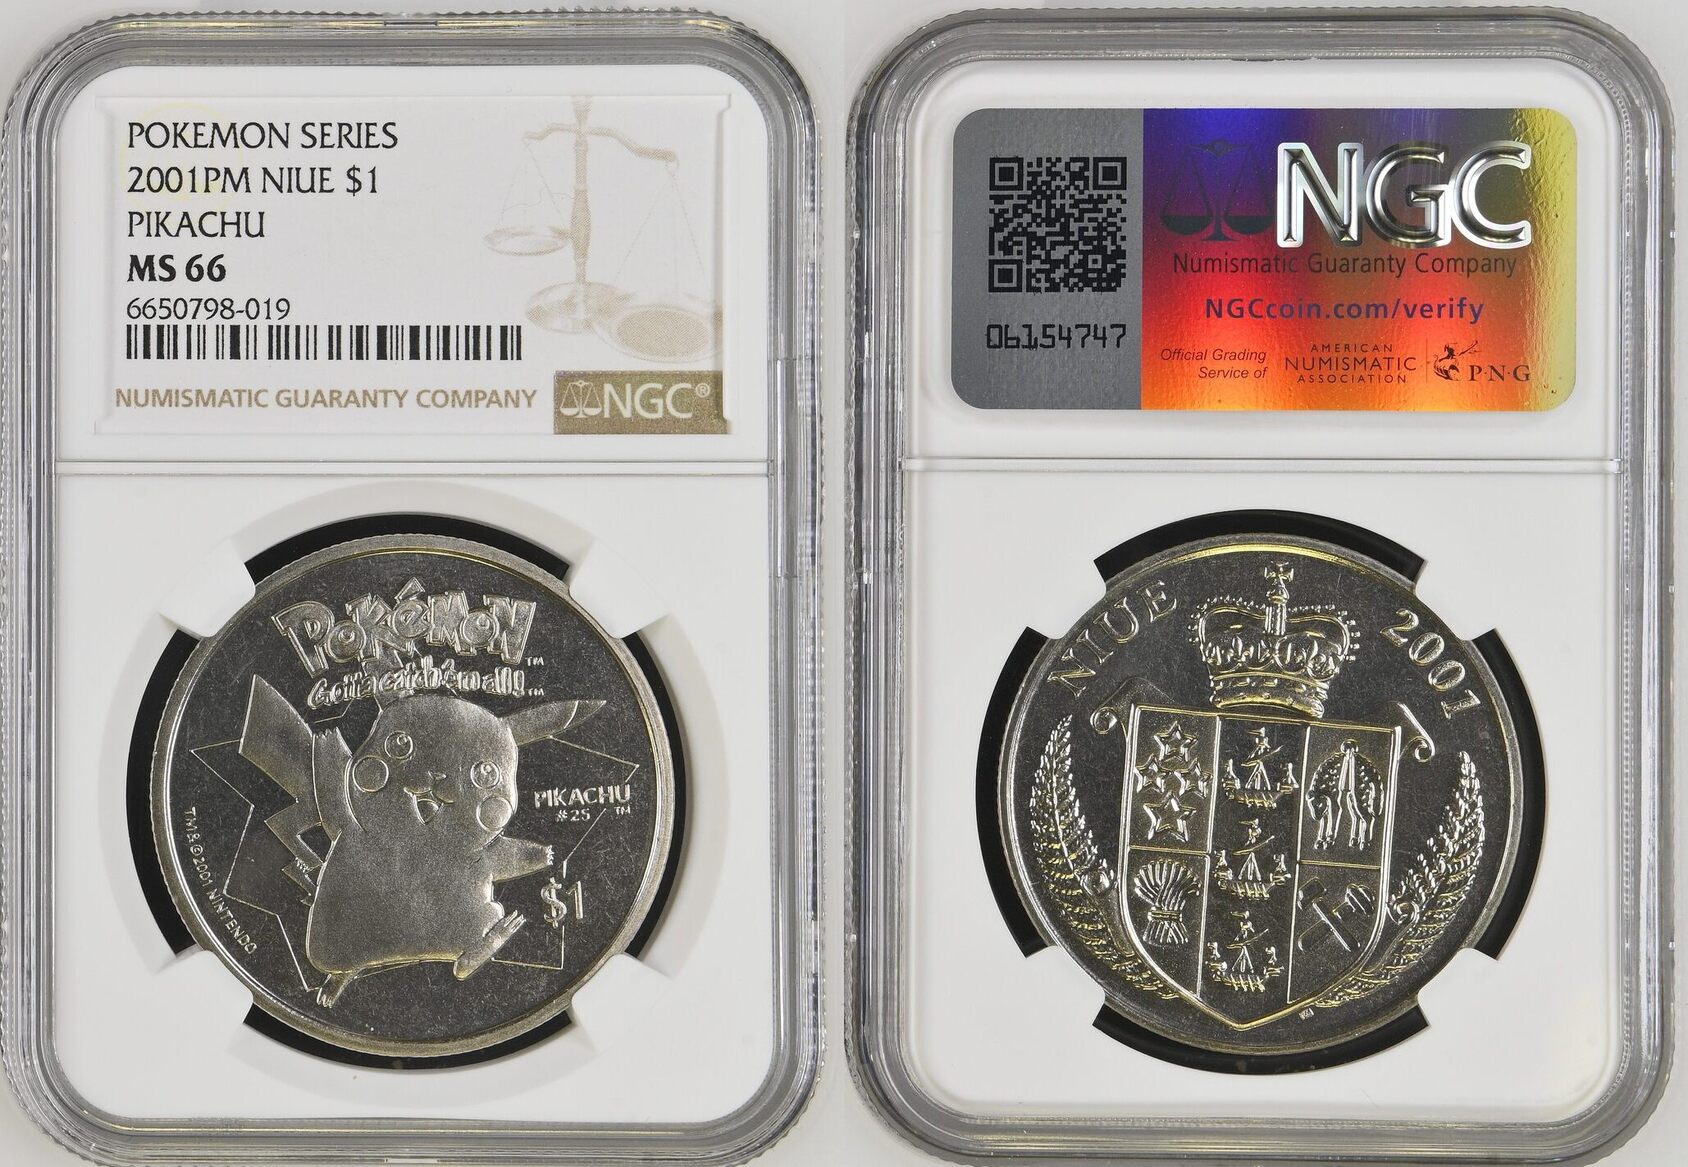 $1 2001PM Niue Pokemon Pikachu nickel coin NGC MS 66 | MA-Shops